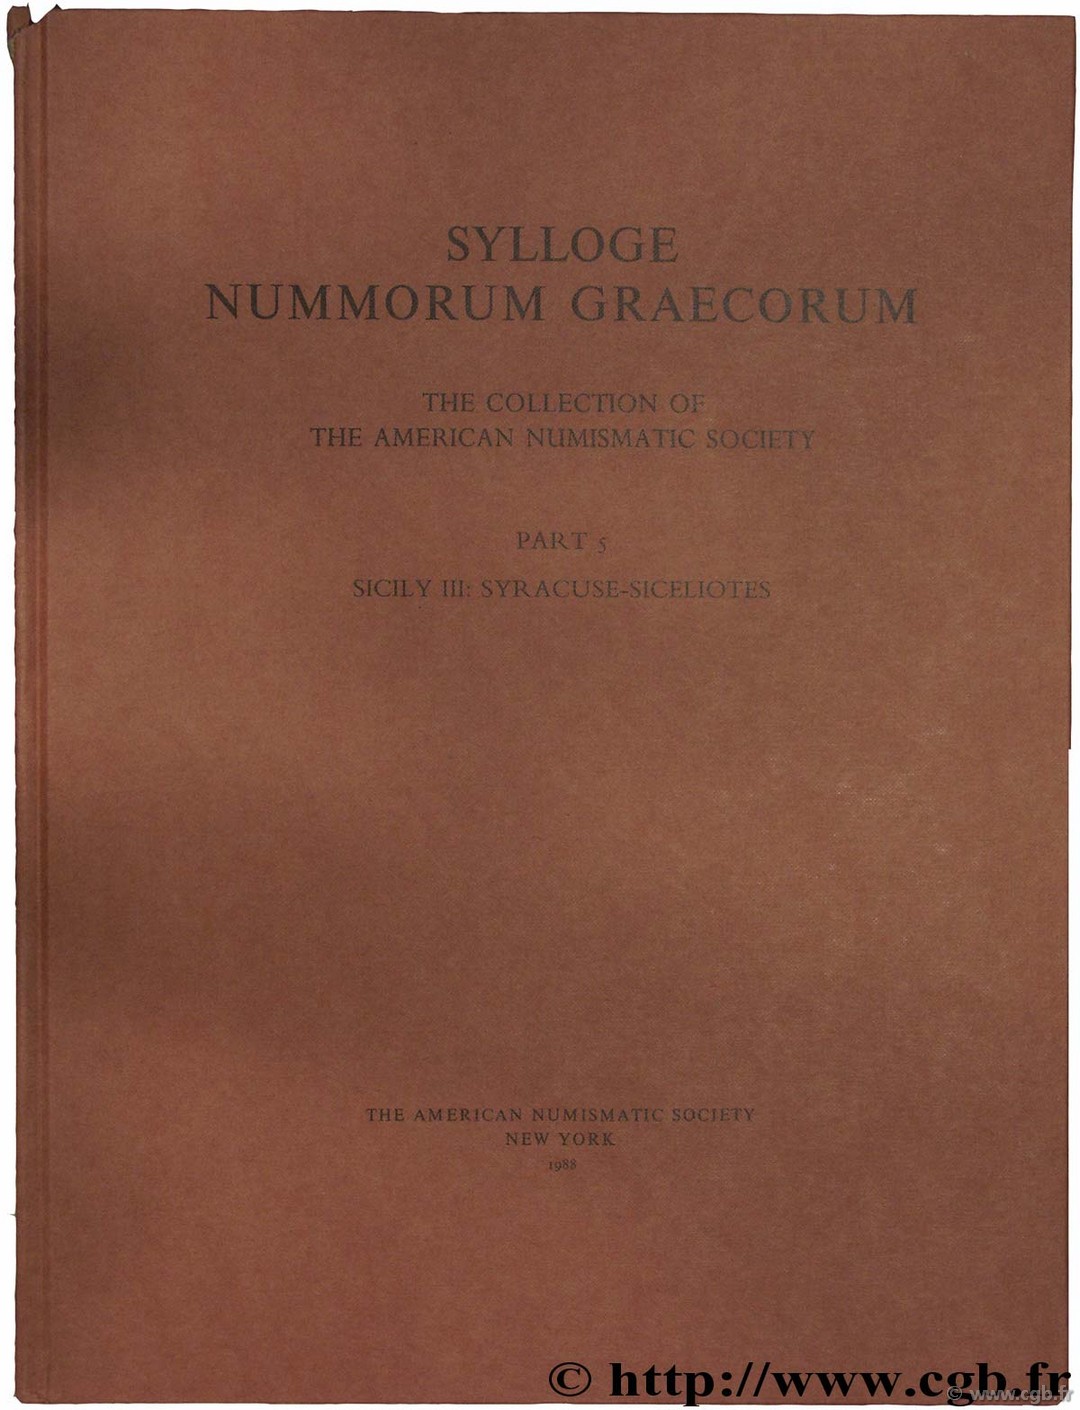 Sylloge Nummorum Graecorum (S.N.G.), The collection of the American Numismatic Society, part 5, Sicily III : Syracuse - Siceliotes 